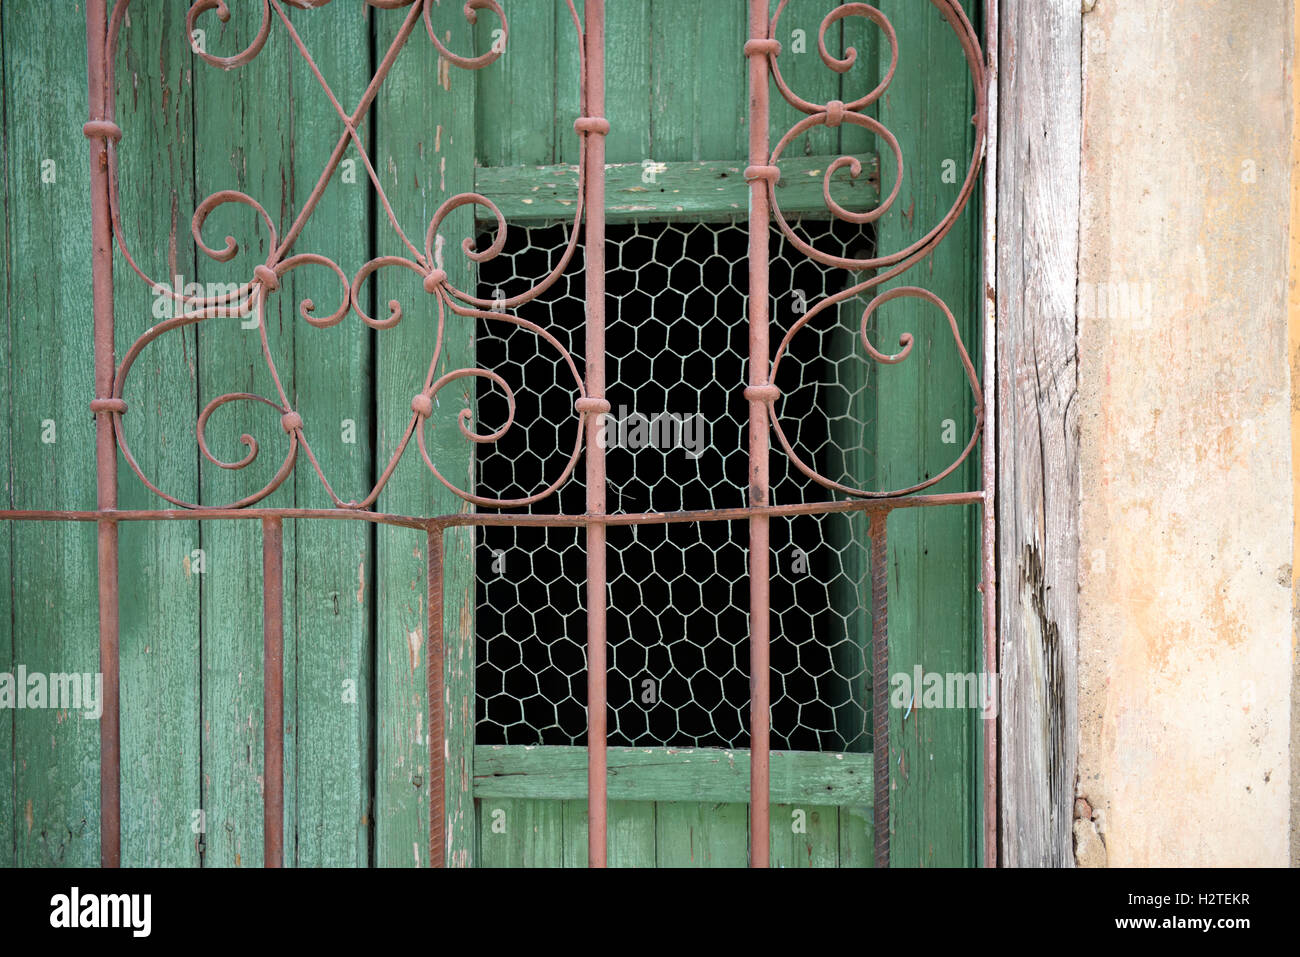 Rustic green wooden door with wire mesh window; Heart iron fence. Stock Photo